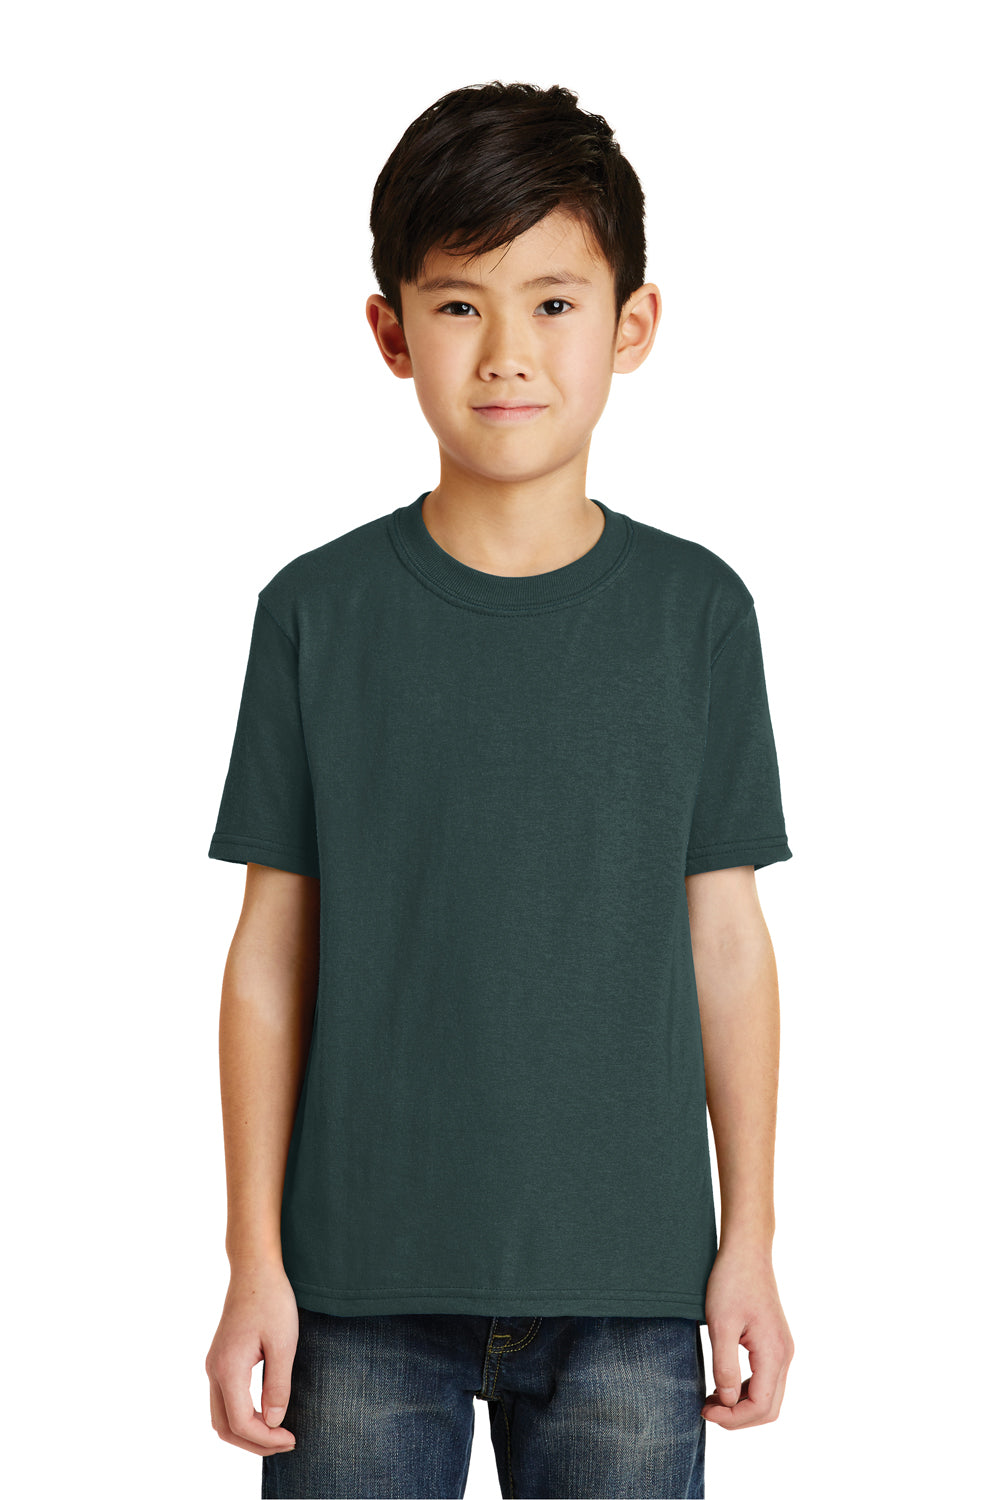 Port & Company PC55Y Youth Core Short Sleeve Crewneck T-Shirt Dark Green Front